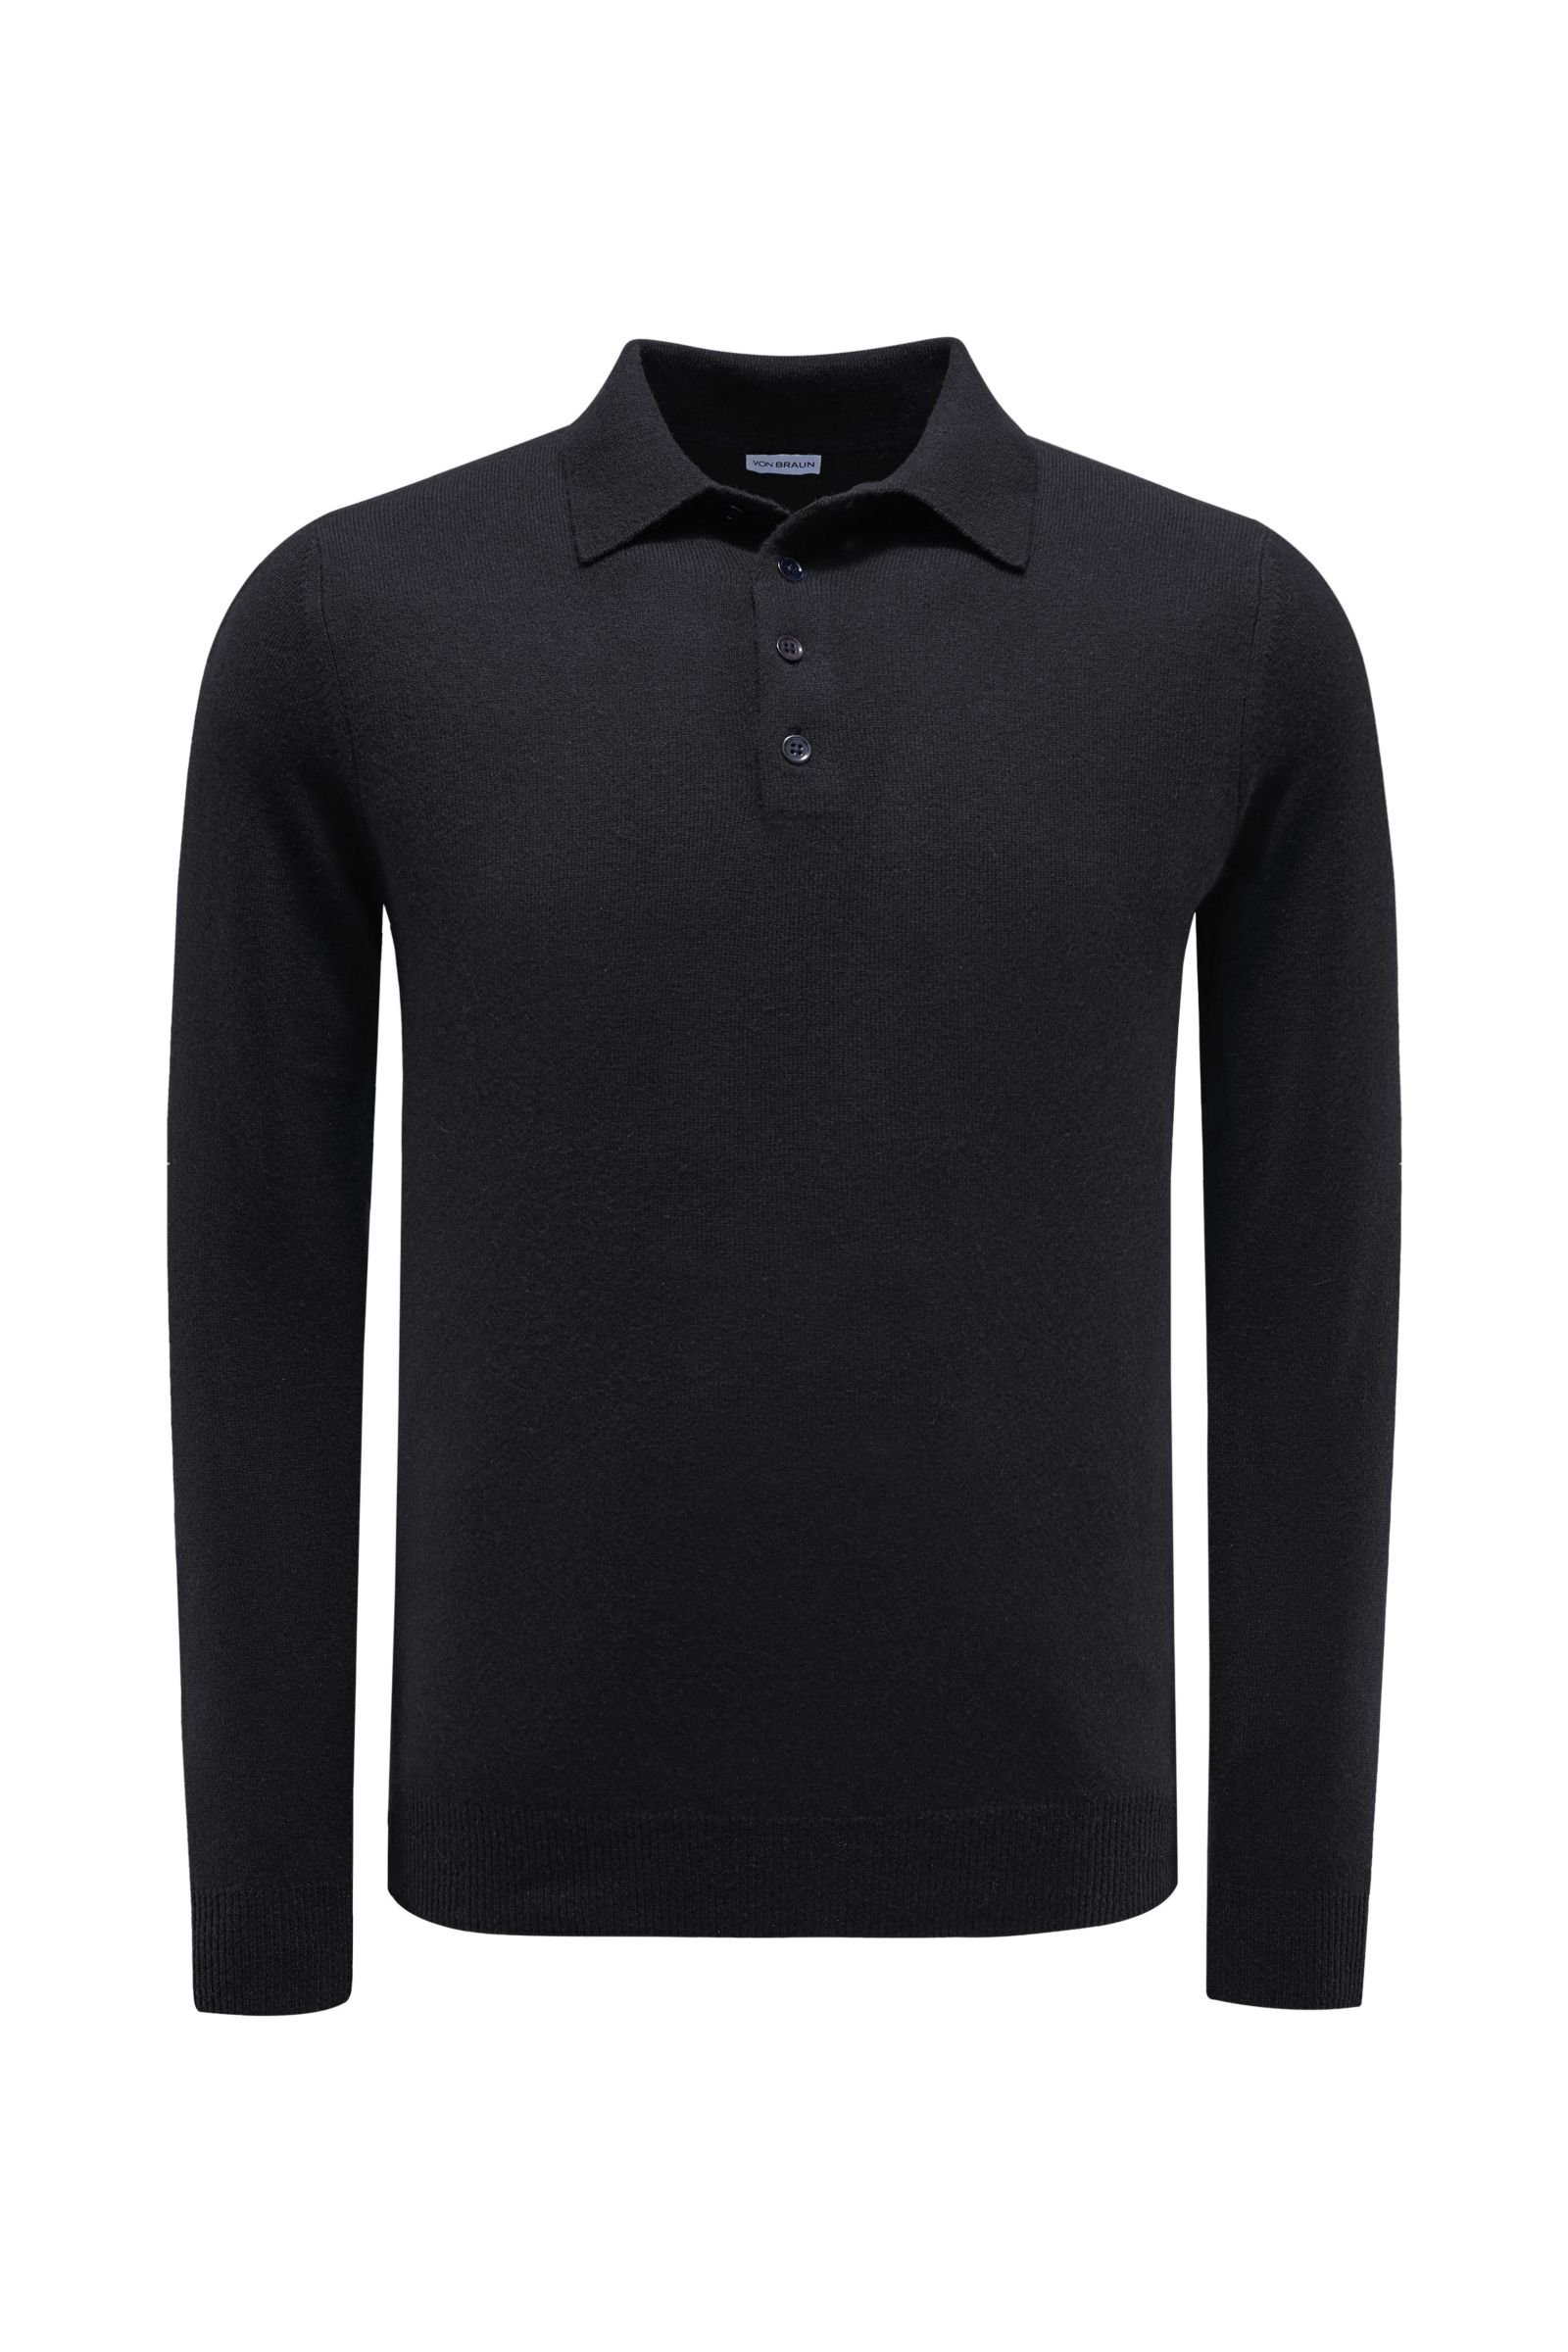 Cashmere knit polo shirt black